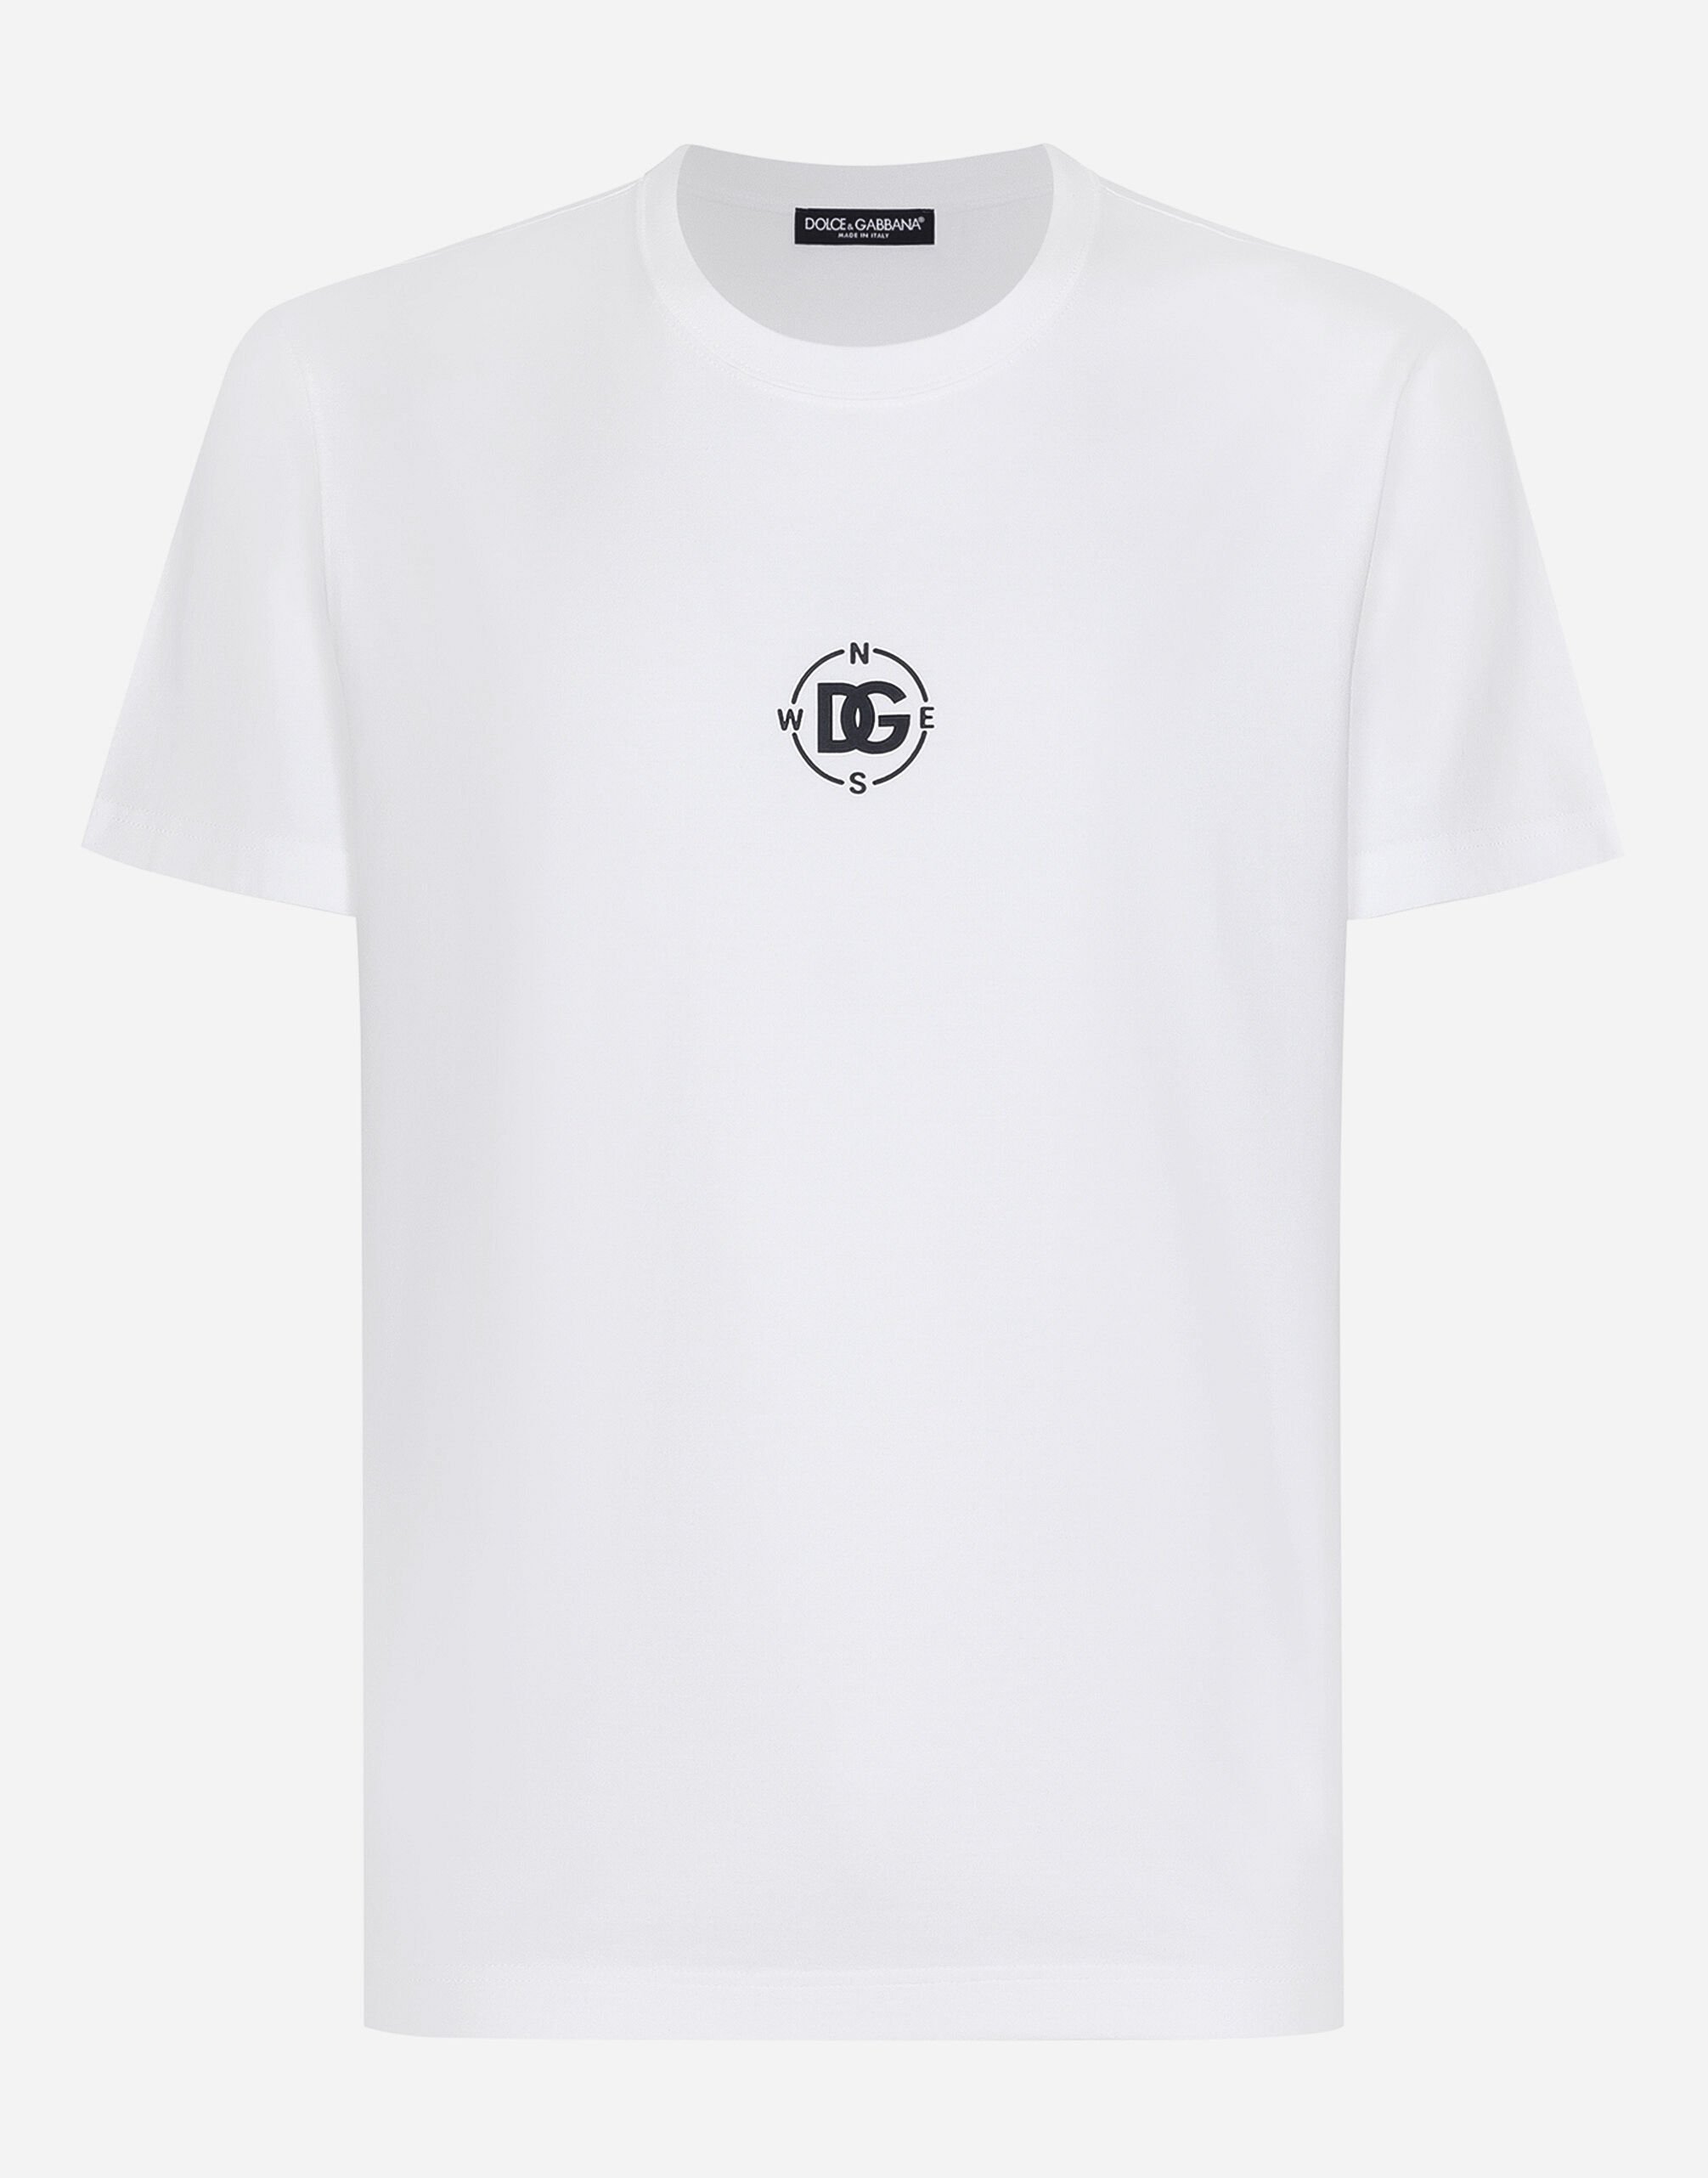 Dolce & Gabbana Short-sleeved cotton T-shirt with Marina print White GP02ETFUFL5